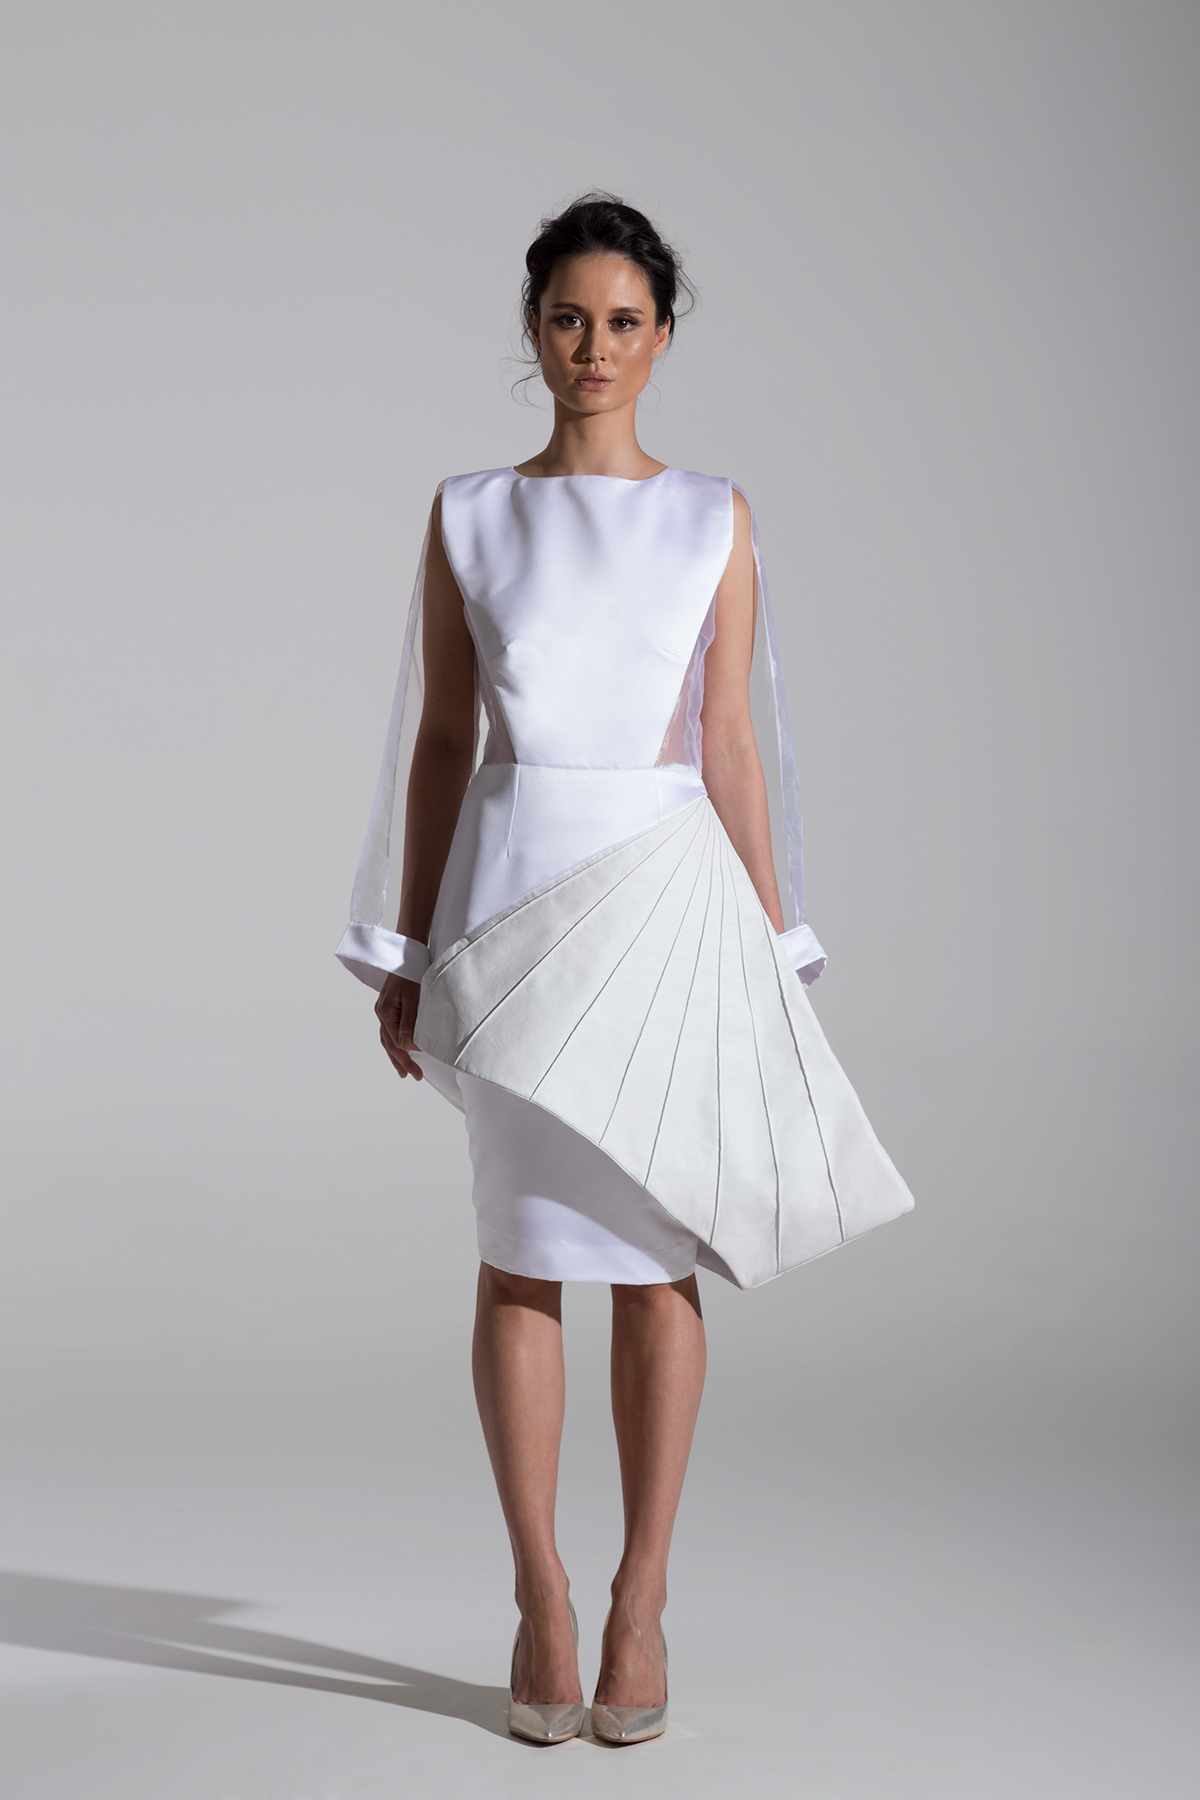 Santiago calatrava moda roupas clothes coleção Collection White black Shadows preto branco conceptual